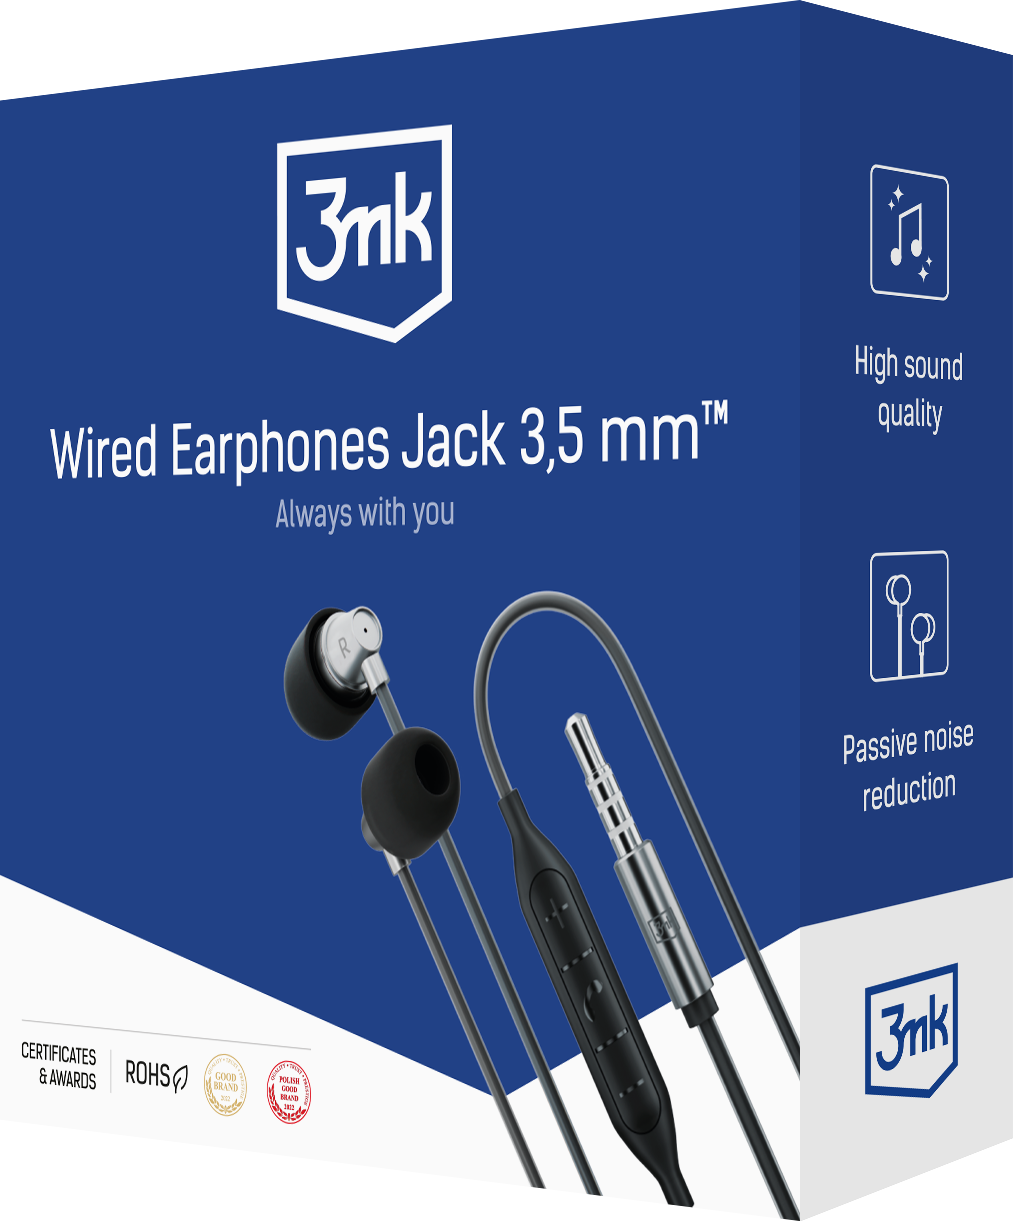 3mk-wired-earphones-jack-35mm_-packsho-v2t